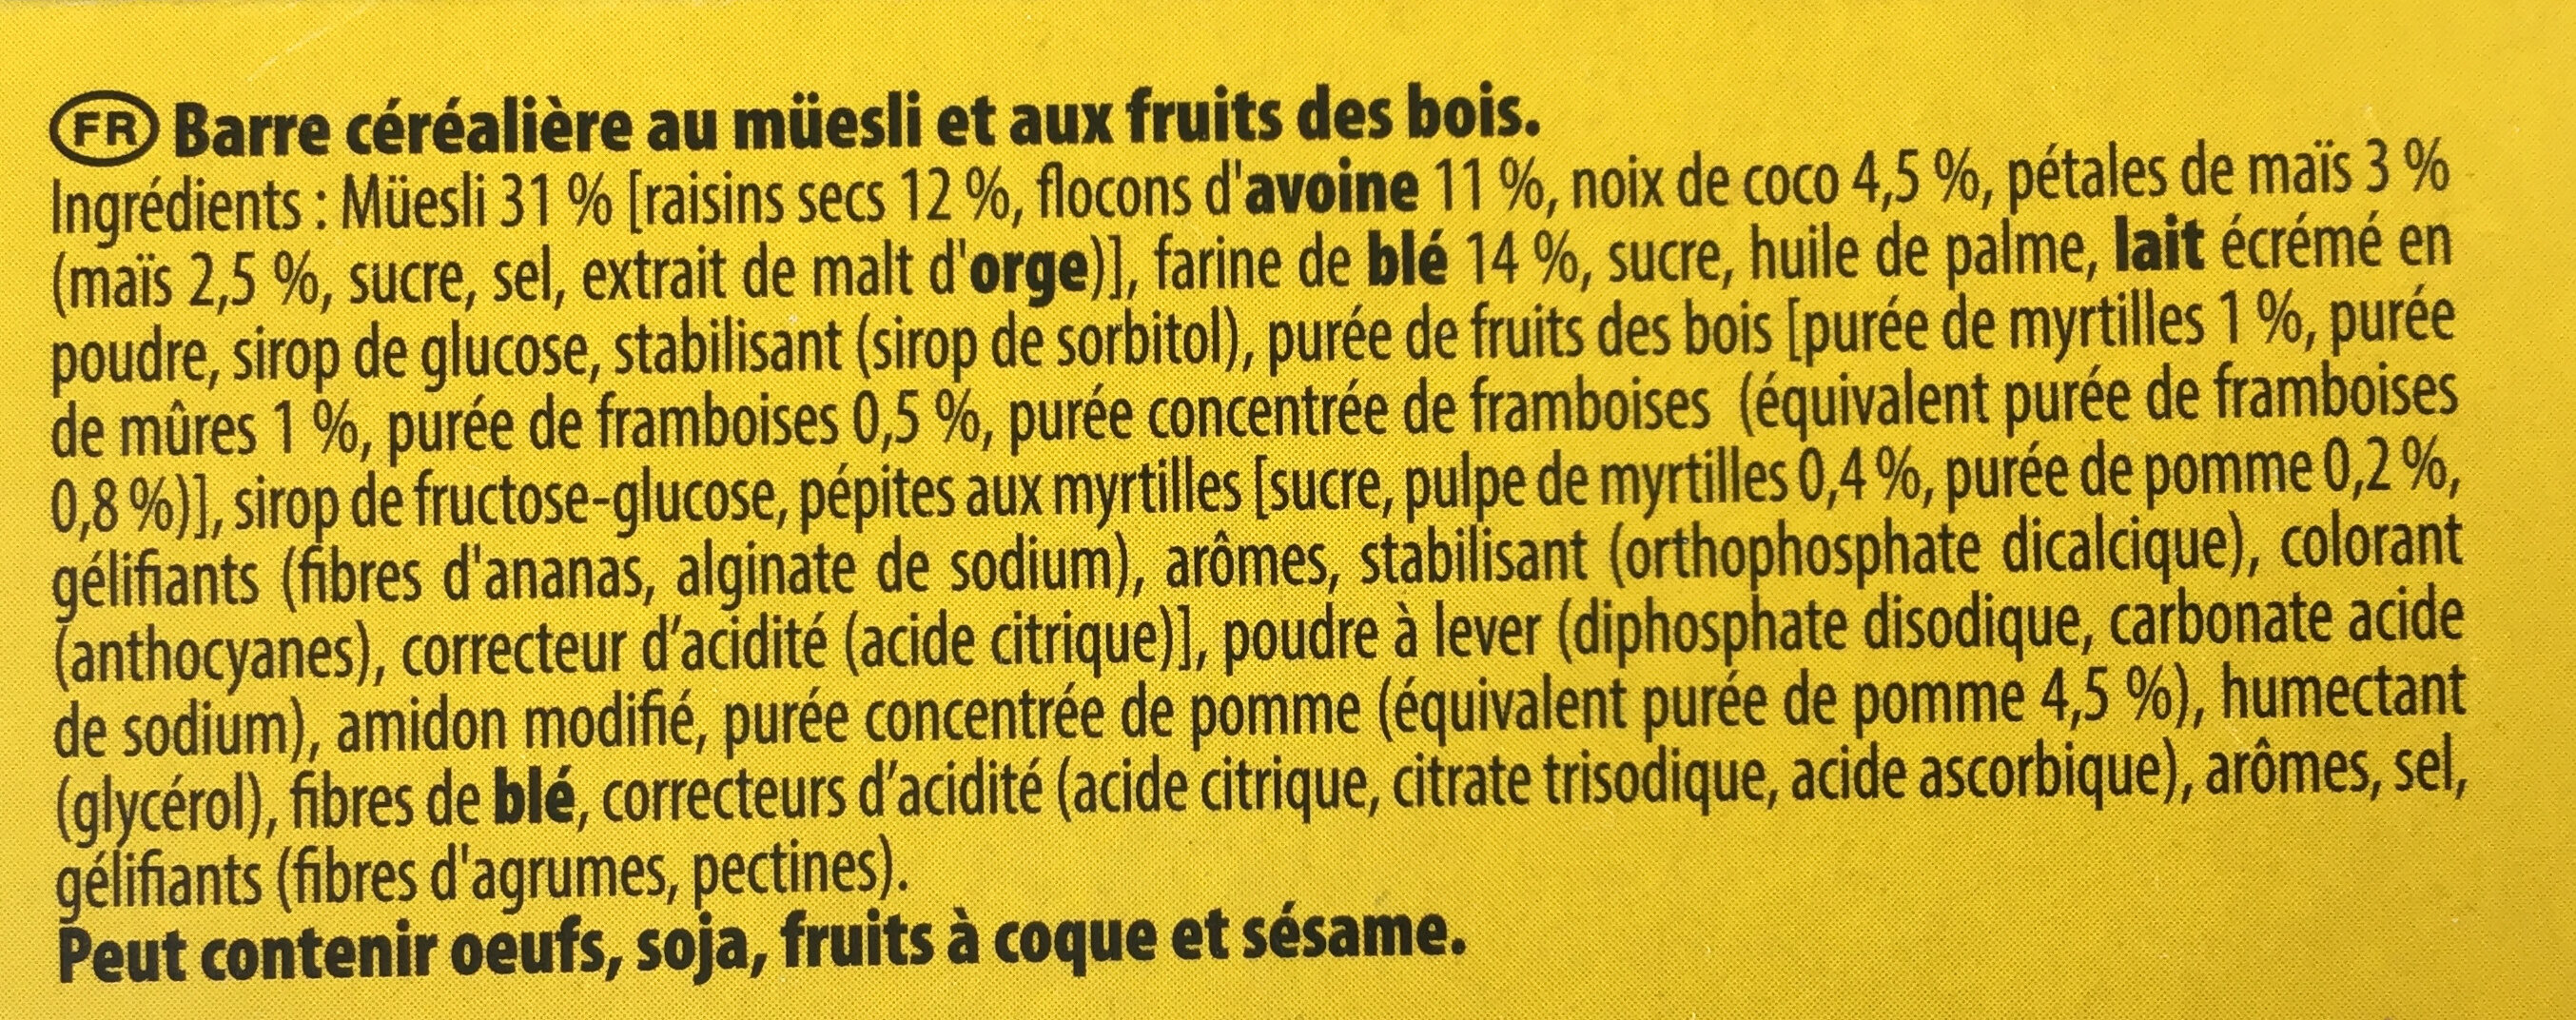 Grany moelleux, fruit des bois - Ingrediënten - fr